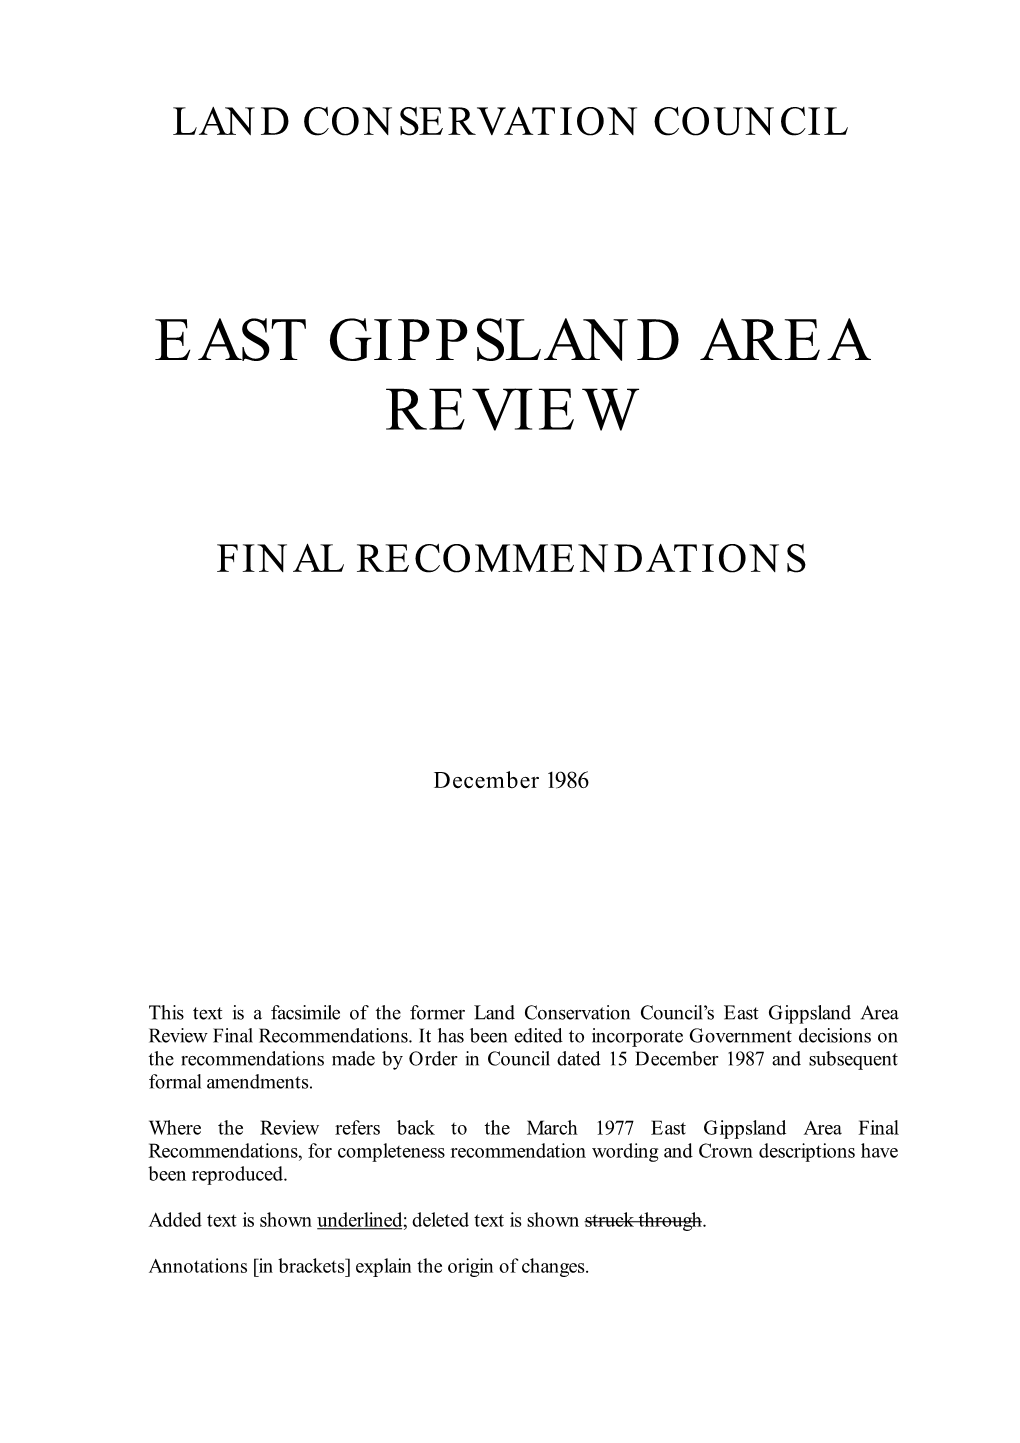 East Gippsland Area Review